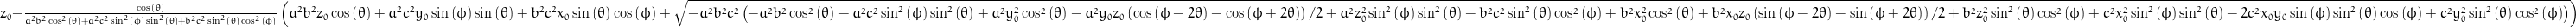 z_{0} - \frac{\cos{\left (\theta \right )}}{a^{2} b^{2} \cos^{2}{\left (\theta \right )} + a^{2} c^{2} \sin^{2}{\left (\phi \right )} \sin^{2}{\left (\theta \right )} + b^{2} c^{2} \sin^{2}{\left (\theta \right )} \cos^{2}{\left (\phi \right )}} \left(a^{2} b^{2} z_{0} \cos{\left (\theta \right )} + a^{2} c^{2} y_{0} \sin{\left (\phi \right )} \sin{\left (\theta \right )} + b^{2} c^{2} x_{0} \sin{\left (\theta \right )} \cos{\left (\phi \right )} + \sqrt{- a^{2} b^{2} c^{2} \left(- a^{2} b^{2} \cos^{2}{\left (\theta \right )} - a^{2} c^{2} \sin^{2}{\left (\phi \right )} \sin^{2}{\left (\theta \right )} + a^{2} y_{0}^{2} \cos^{2}{\left (\theta \right )} - \frac{y_{0} z_{0}}{2} a^{2} \left(\cos{\left (\phi - 2 \theta \right )} - \cos{\left (\phi + 2 \theta \right )}\right) + a^{2} z_{0}^{2} \sin^{2}{\left (\phi \right )} \sin^{2}{\left (\theta \right )} - b^{2} c^{2} \sin^{2}{\left (\theta \right )} \cos^{2}{\left (\phi \right )} + b^{2} x_{0}^{2} \cos^{2}{\left (\theta \right )} + \frac{x_{0} z_{0}}{2} b^{2} \left(\sin{\left (\phi - 2 \theta \right )} - \sin{\left (\phi + 2 \theta \right )}\right) + b^{2} z_{0}^{2} \sin^{2}{\left (\theta \right )} \cos^{2}{\left (\phi \right )} + c^{2} x_{0}^{2} \sin^{2}{\left (\phi \right )} \sin^{2}{\left (\theta \right )} - 2 c^{2} x_{0} y_{0} \sin{\left (\phi \right )} \sin^{2}{\left (\theta \right )} \cos{\left (\phi \right )} + c^{2} y_{0}^{2} \sin^{2}{\left (\theta \right )} \cos^{2}{\left (\phi \right )}\right)}\right)